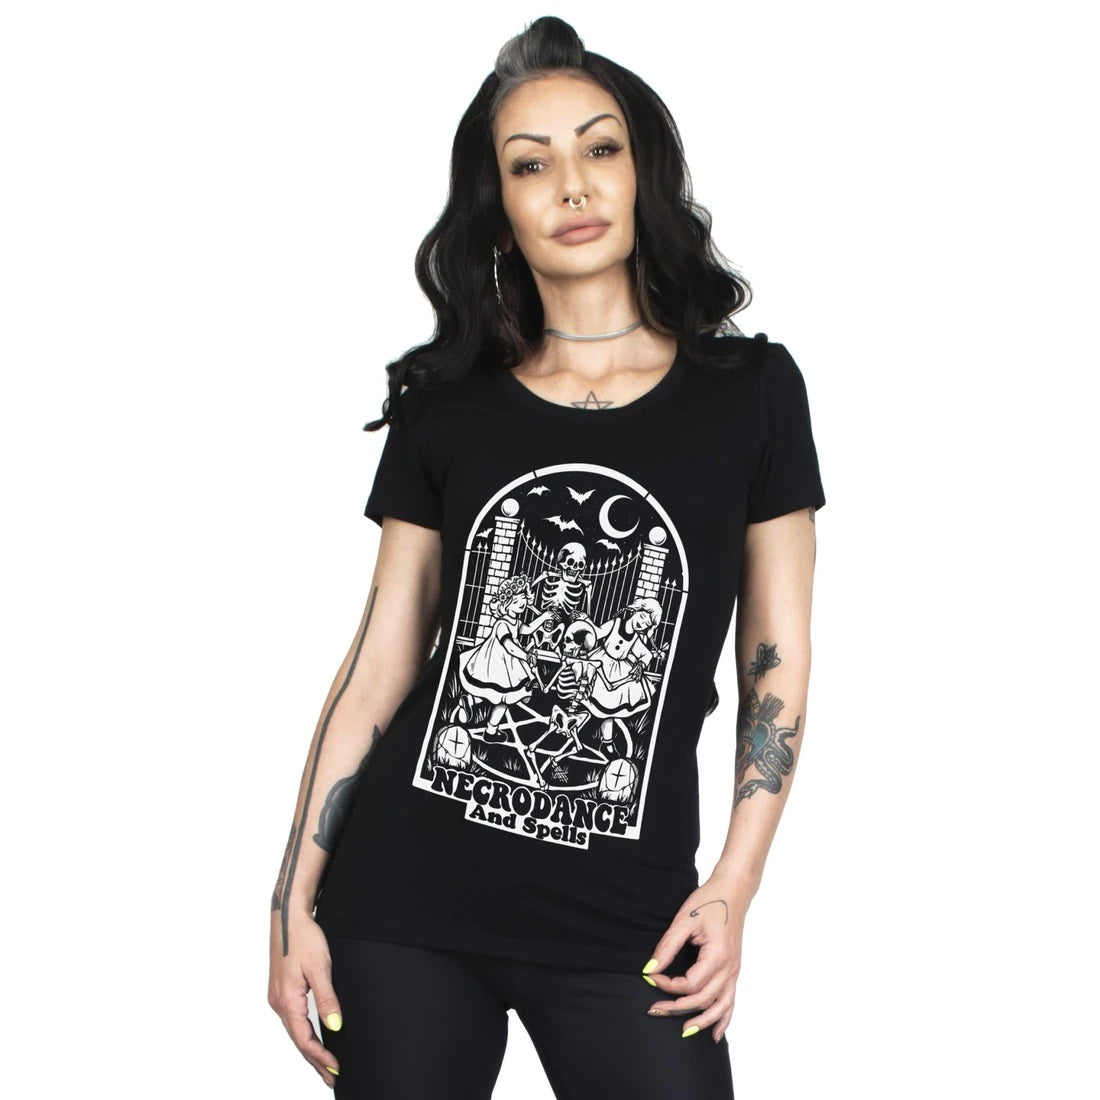 Necrodance And Spells Black Graphic T Shirt-Womens Tops-Scarlett Dawn